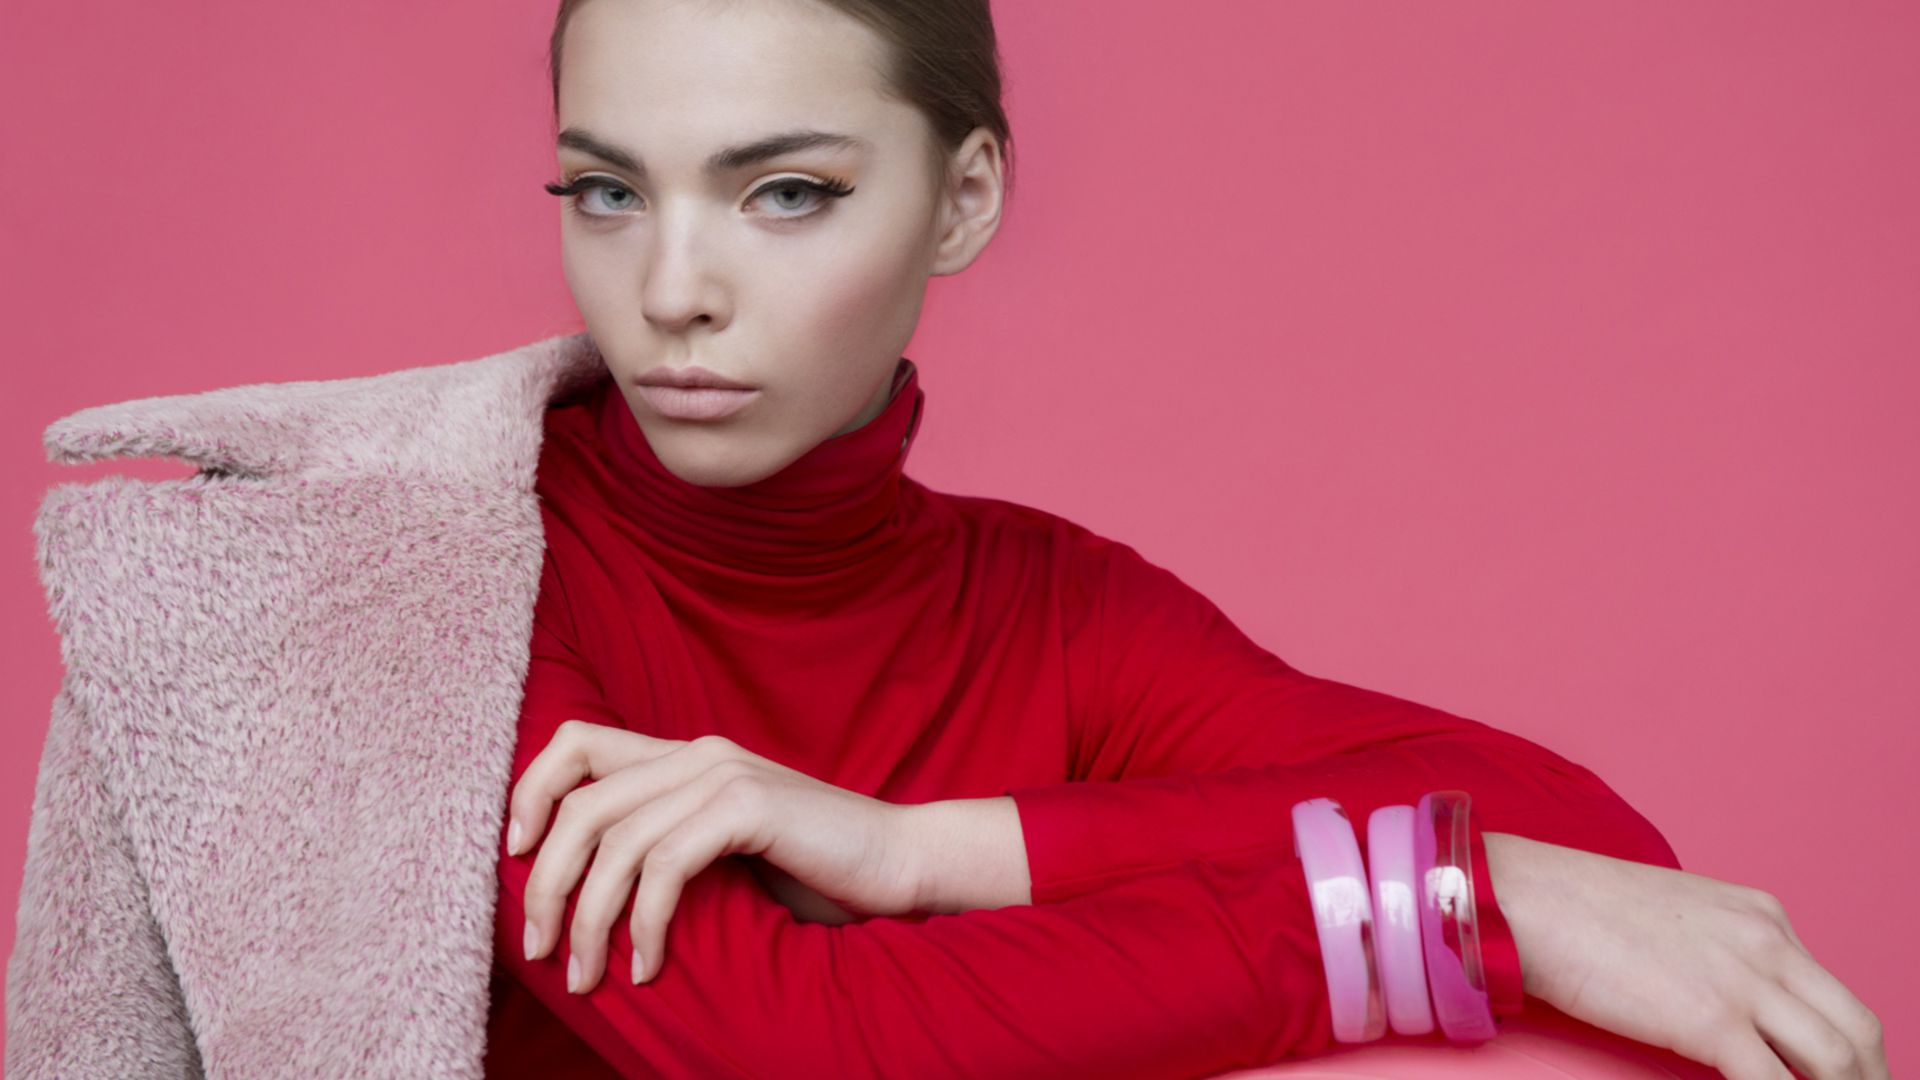 Kasia Bielska, Top Fashion Models, model, pink (horizontal)